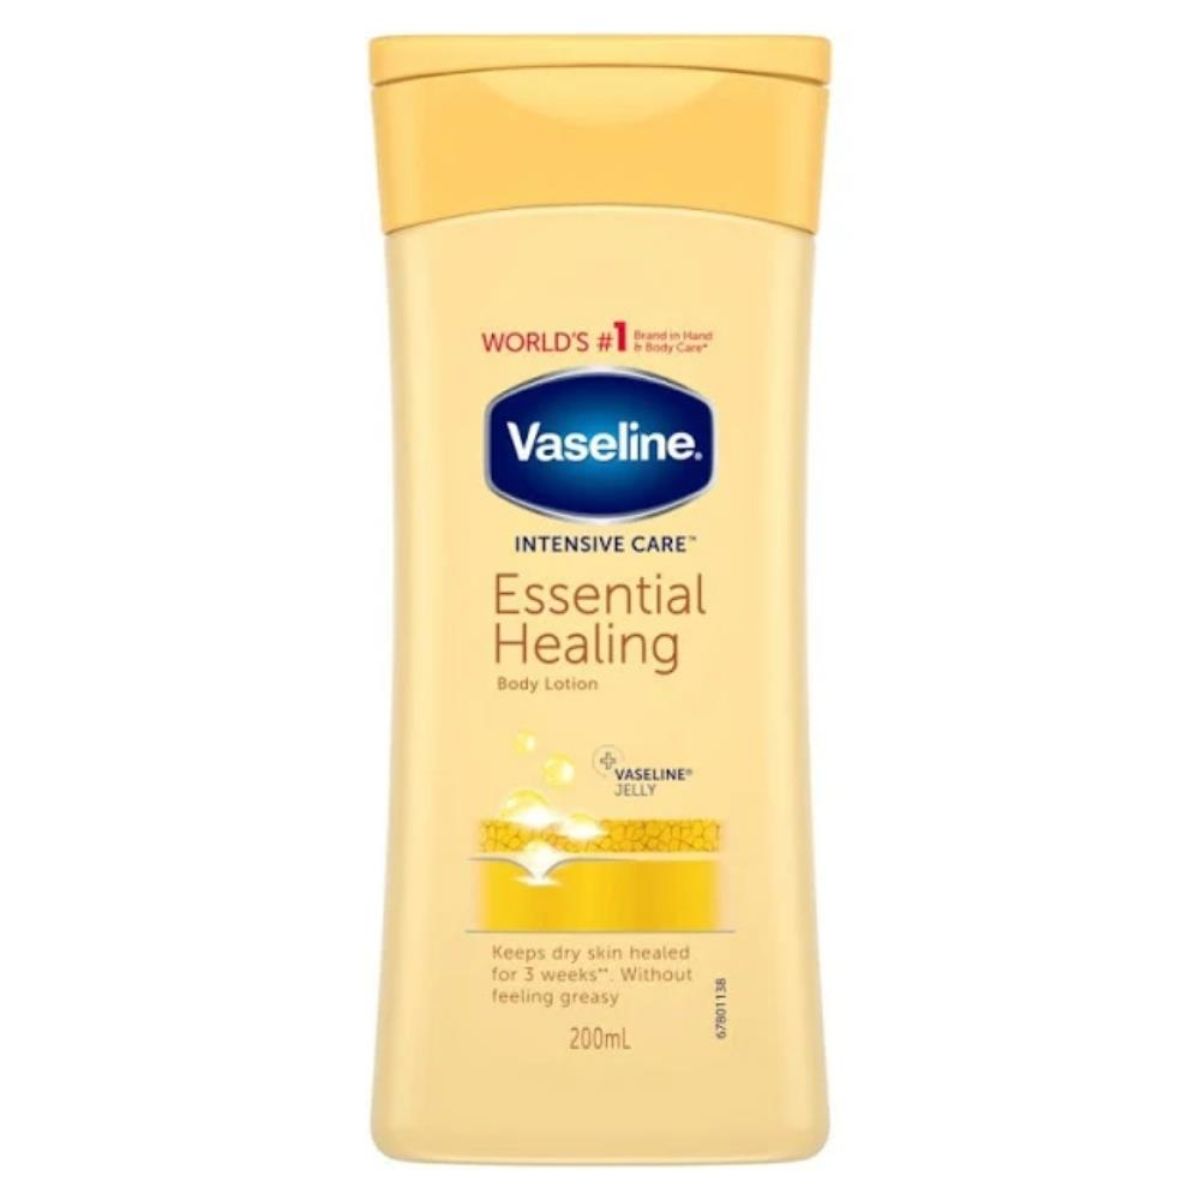 Vaseline - Essential Healing Body Lotion - 200ml